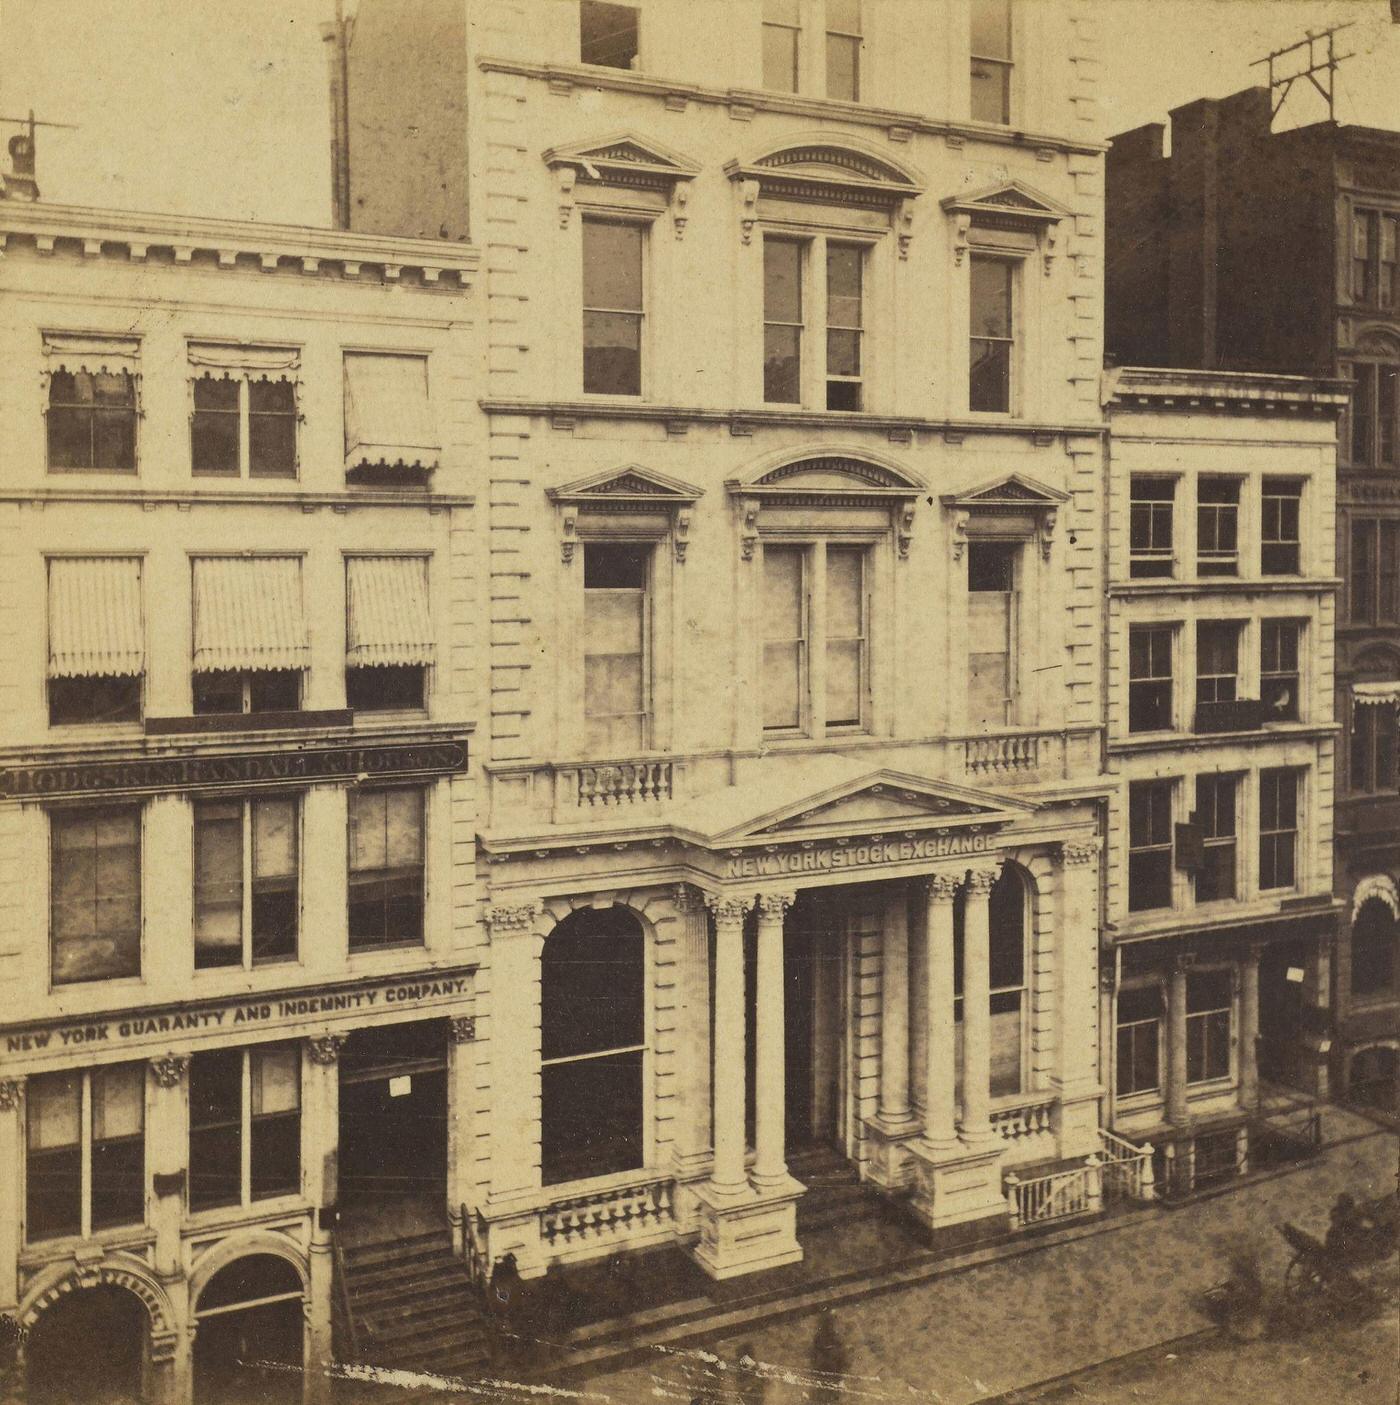 New York Stock Exchange, Broad St, New York City, 1864